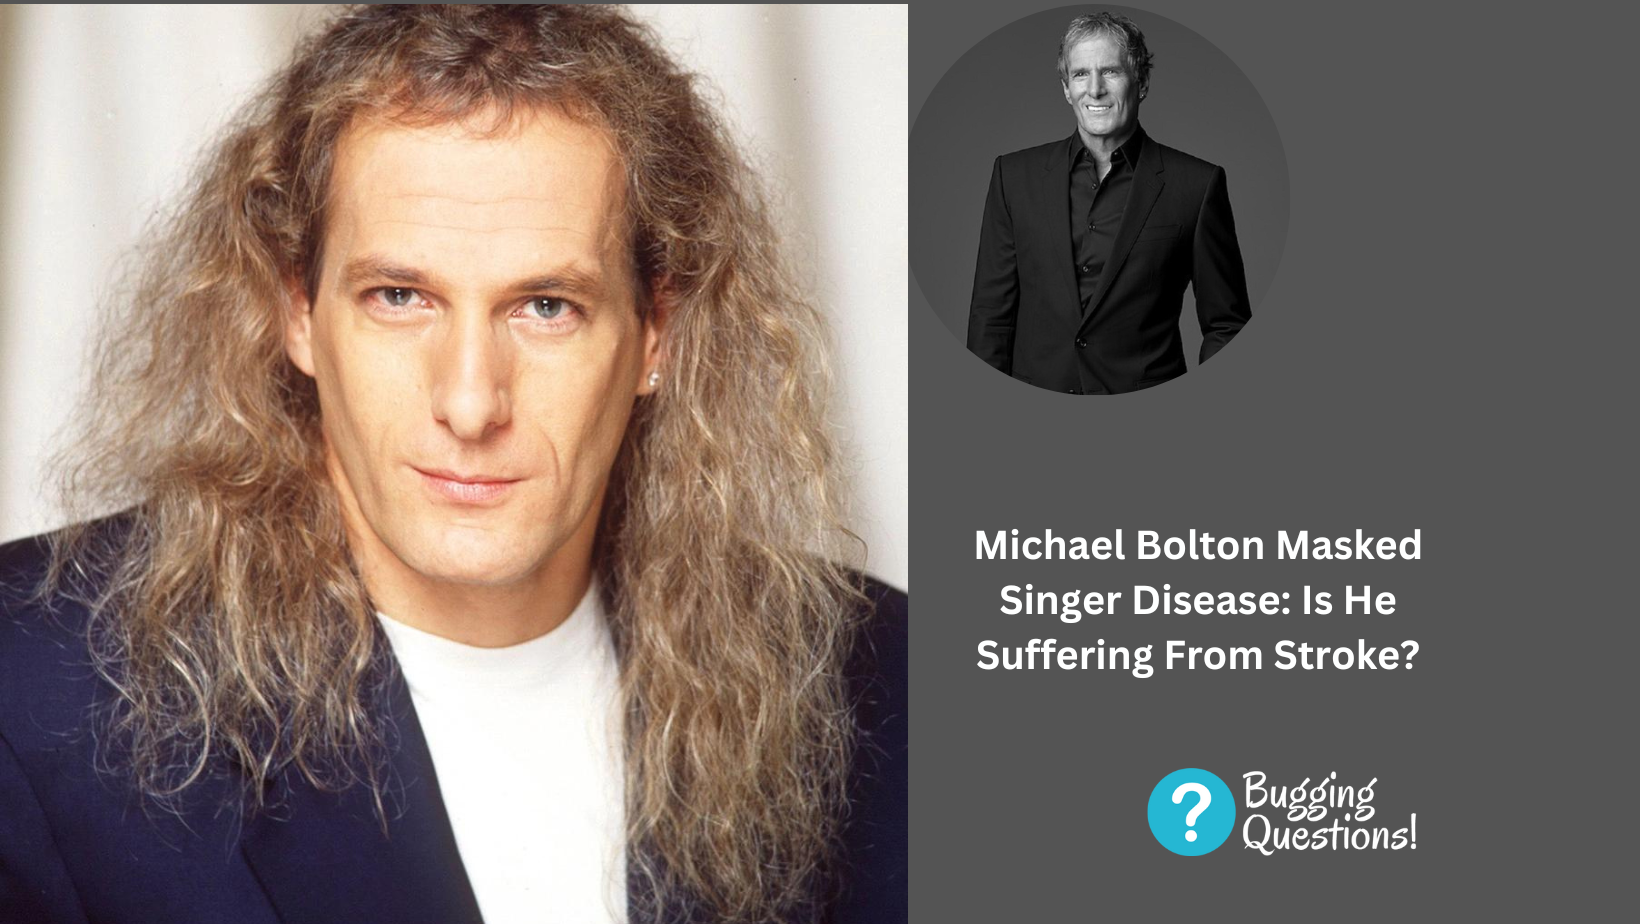 Michael Bolton Masked Singer Disease: Is He Suffering From Stroke?